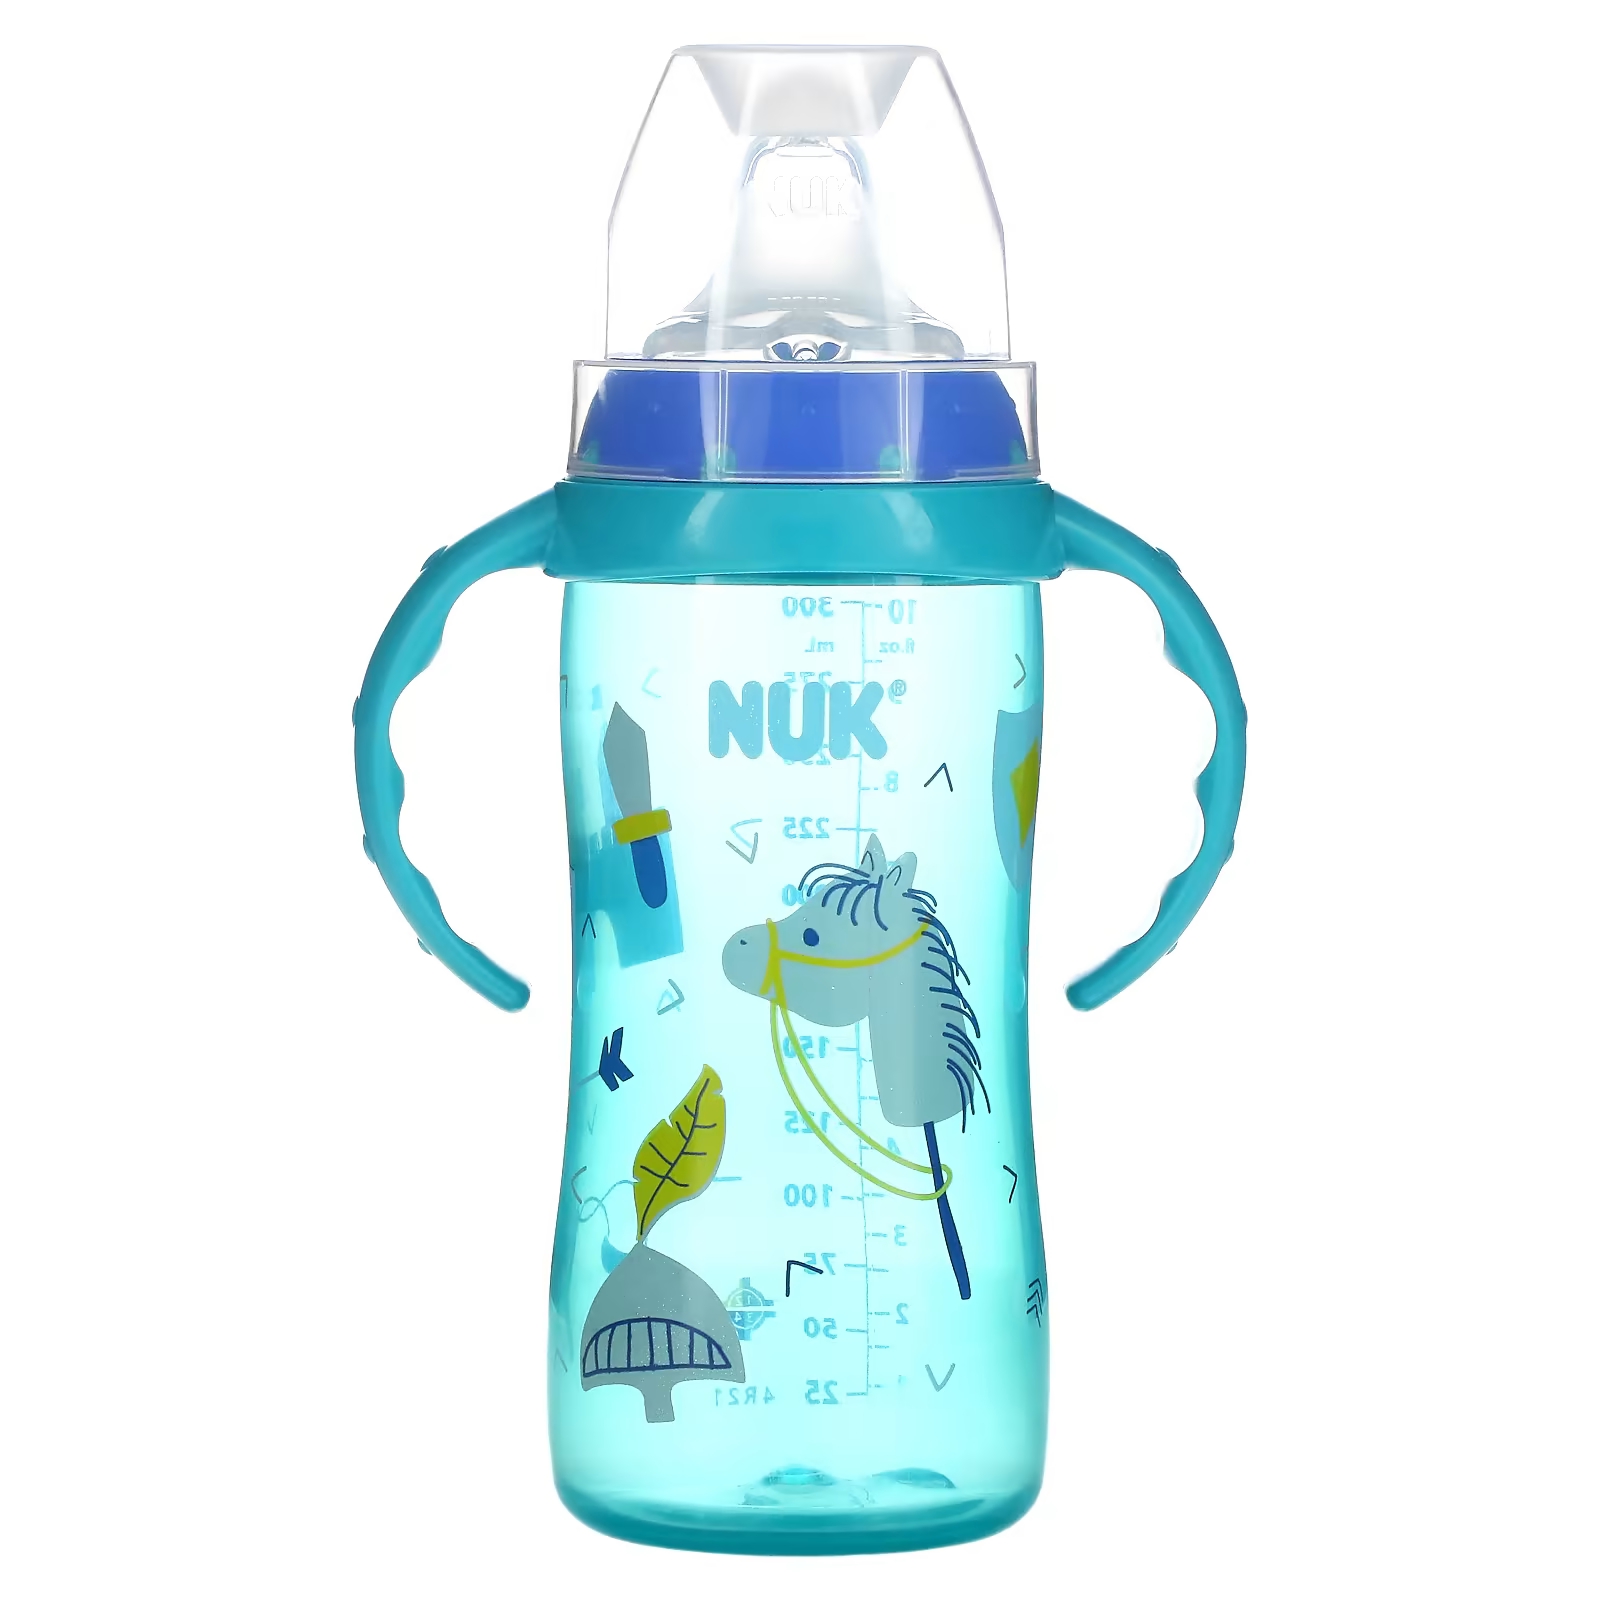 Бутылочка NUK от 8 месяцев синяя 1 упаковка, 300мл nuk large learner cup для детей от 8 месяцев синий 1 упаковка 300 мл 10 унций